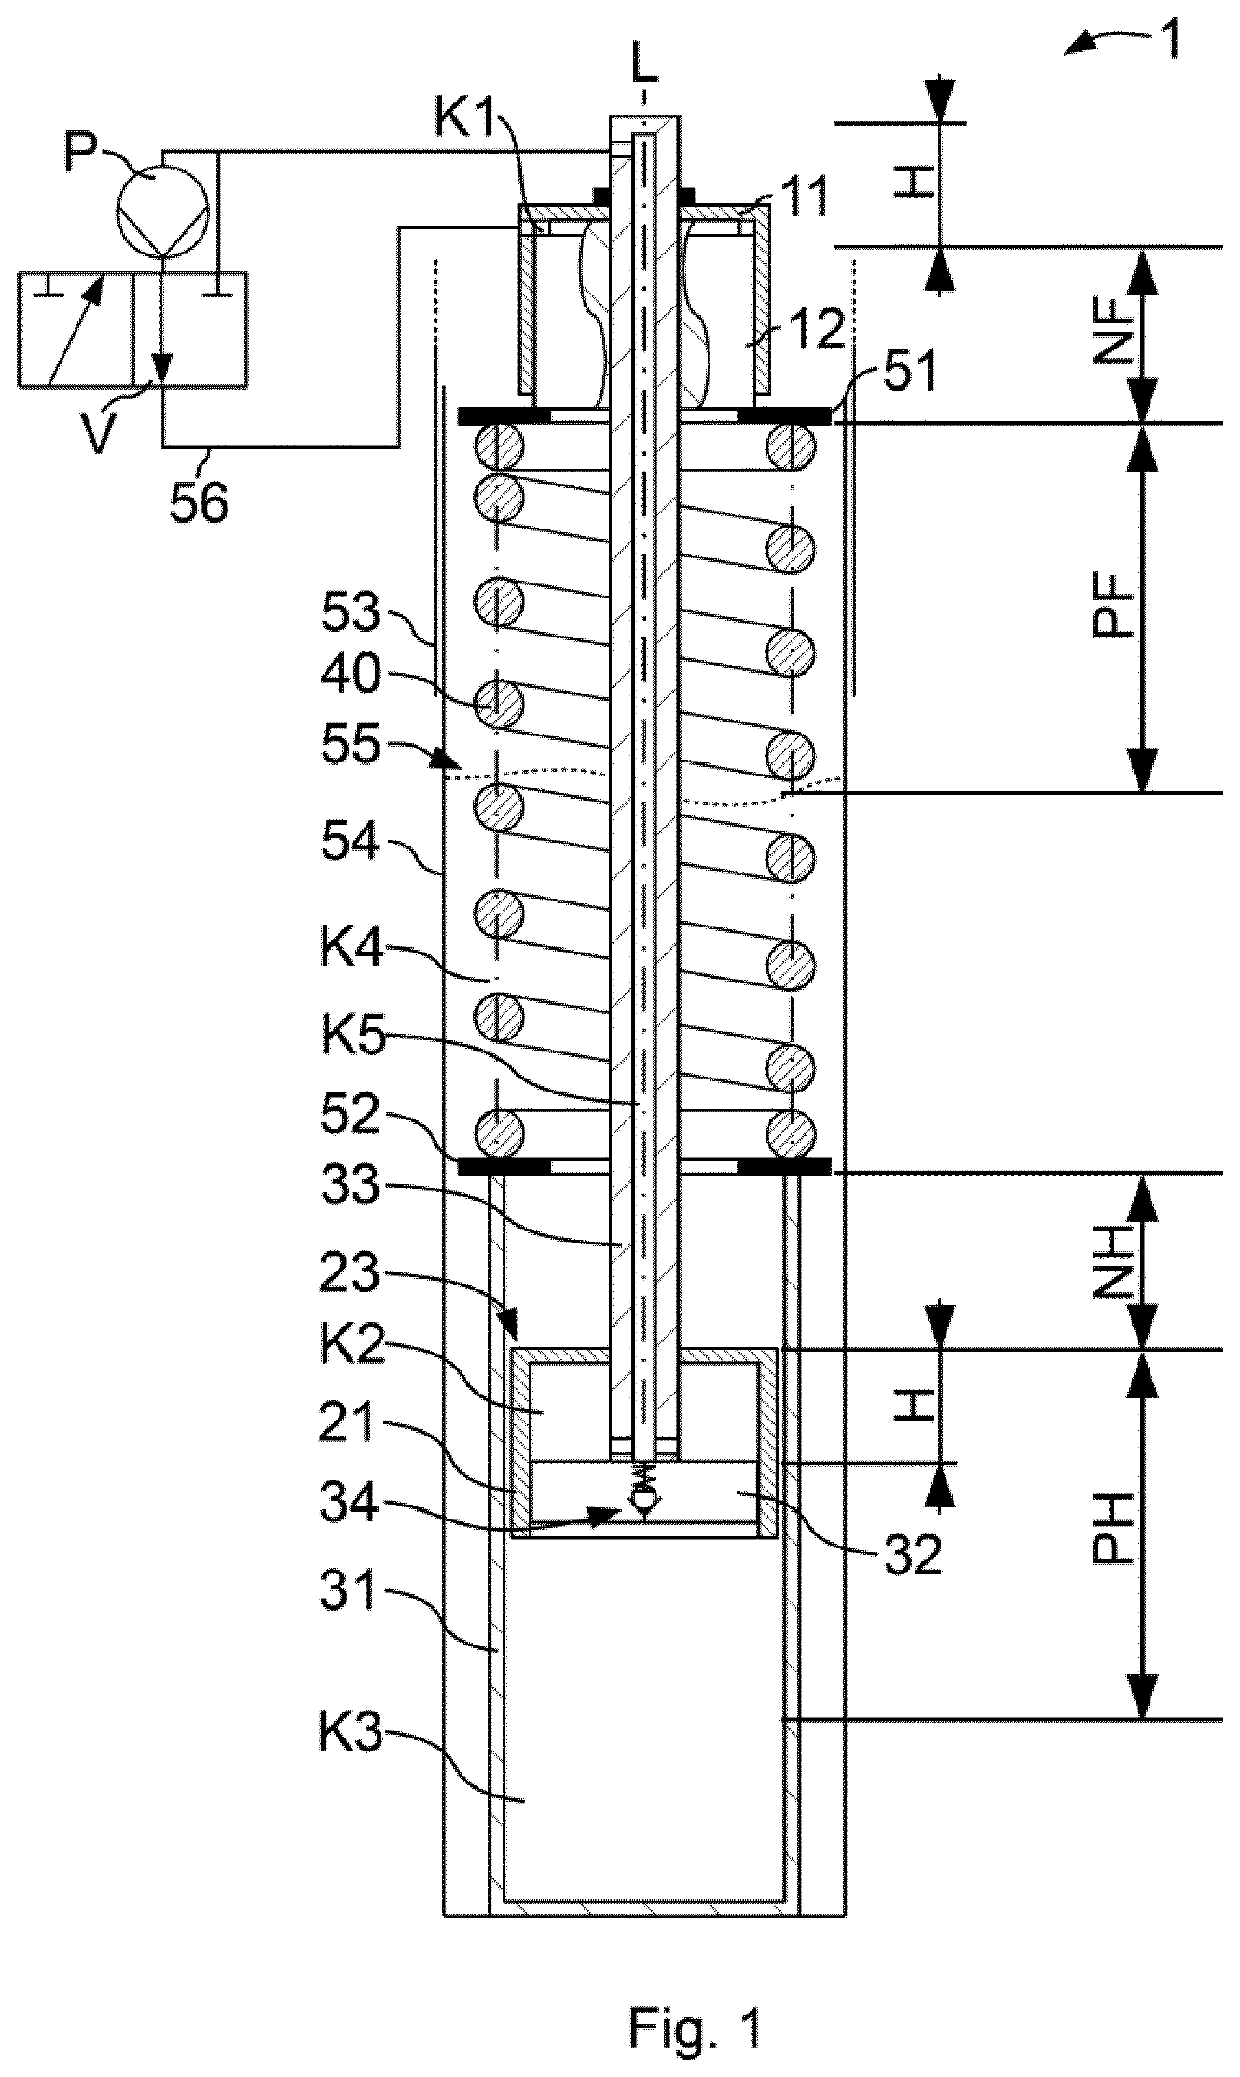 Height-adjustable spring arrangement for a vehicle